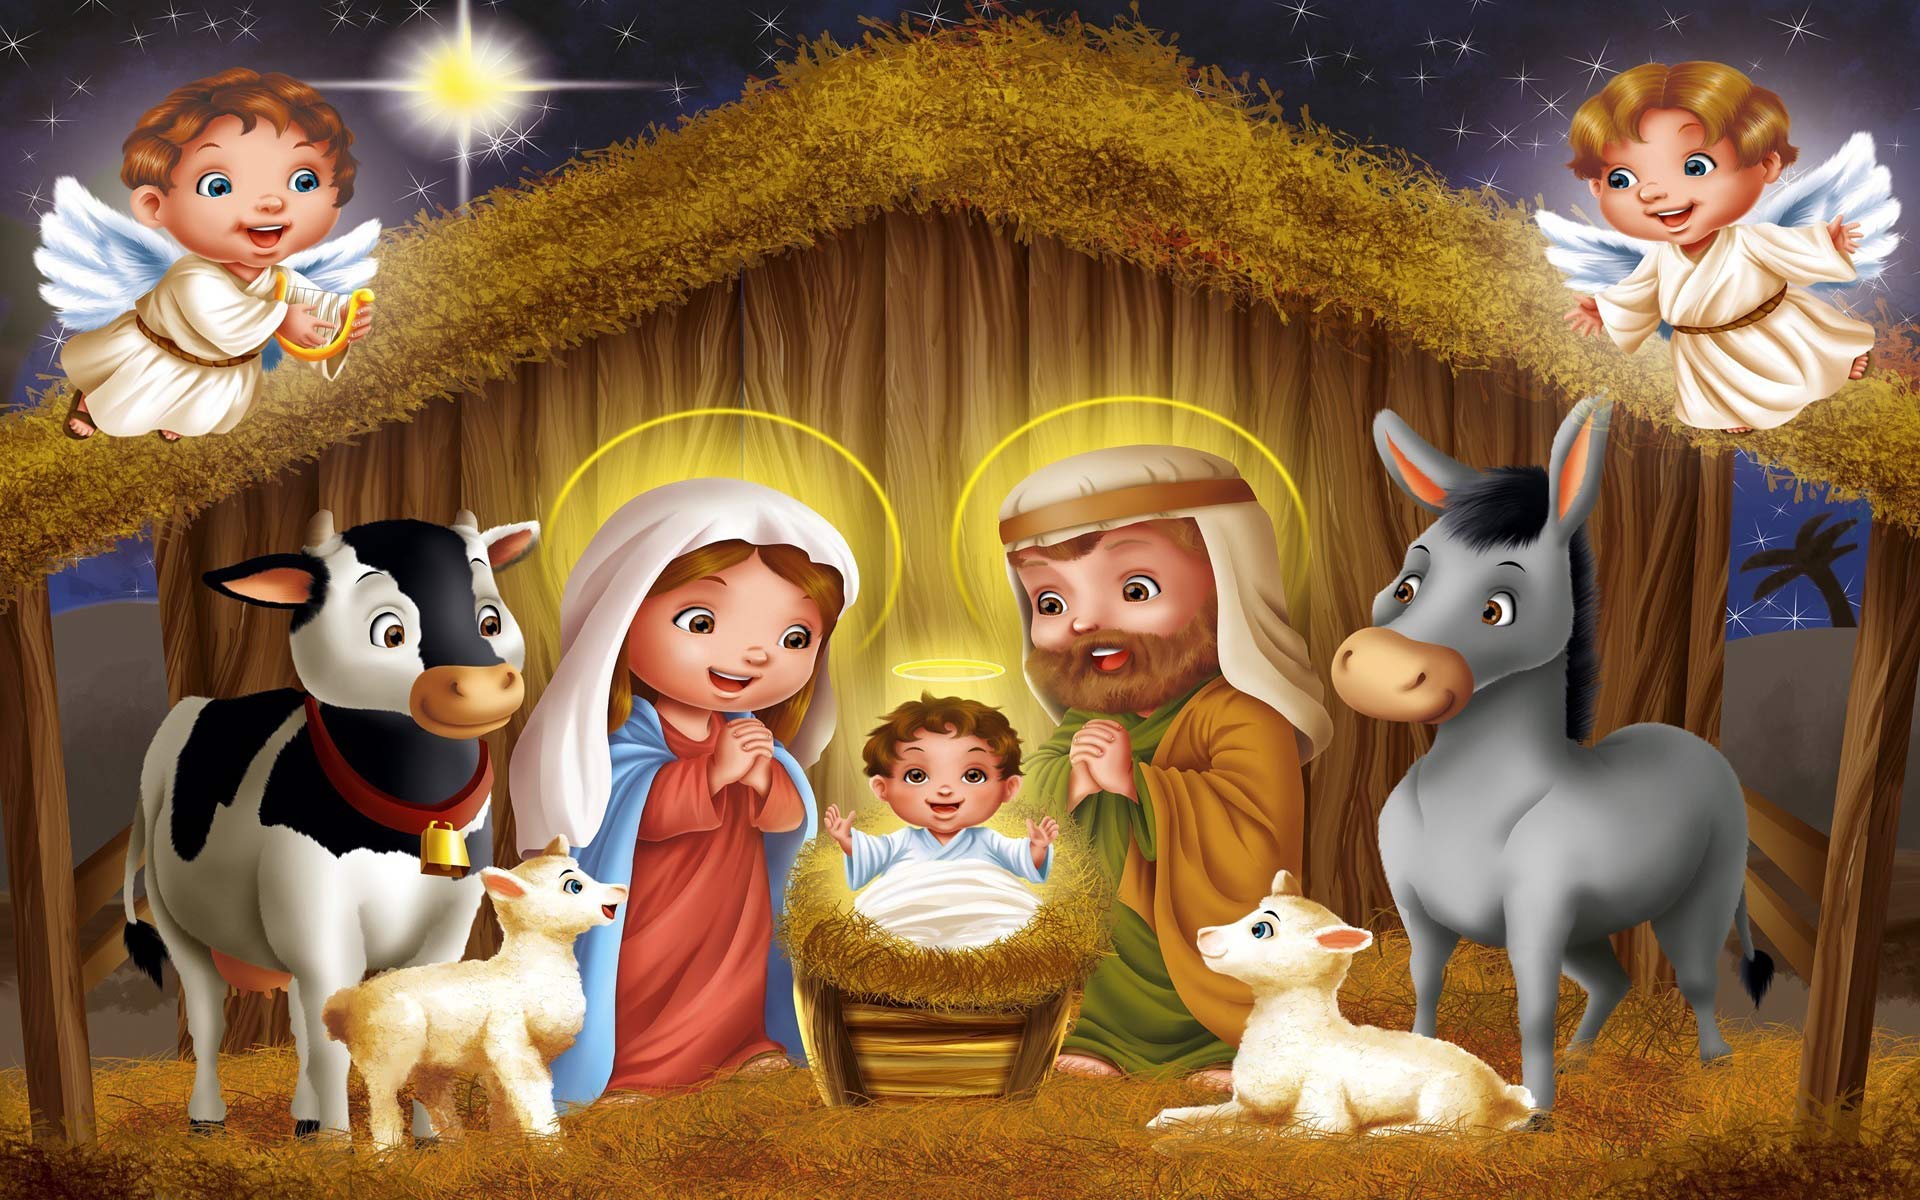 Free Christmas Nativity Scene computer desktop wallpaper